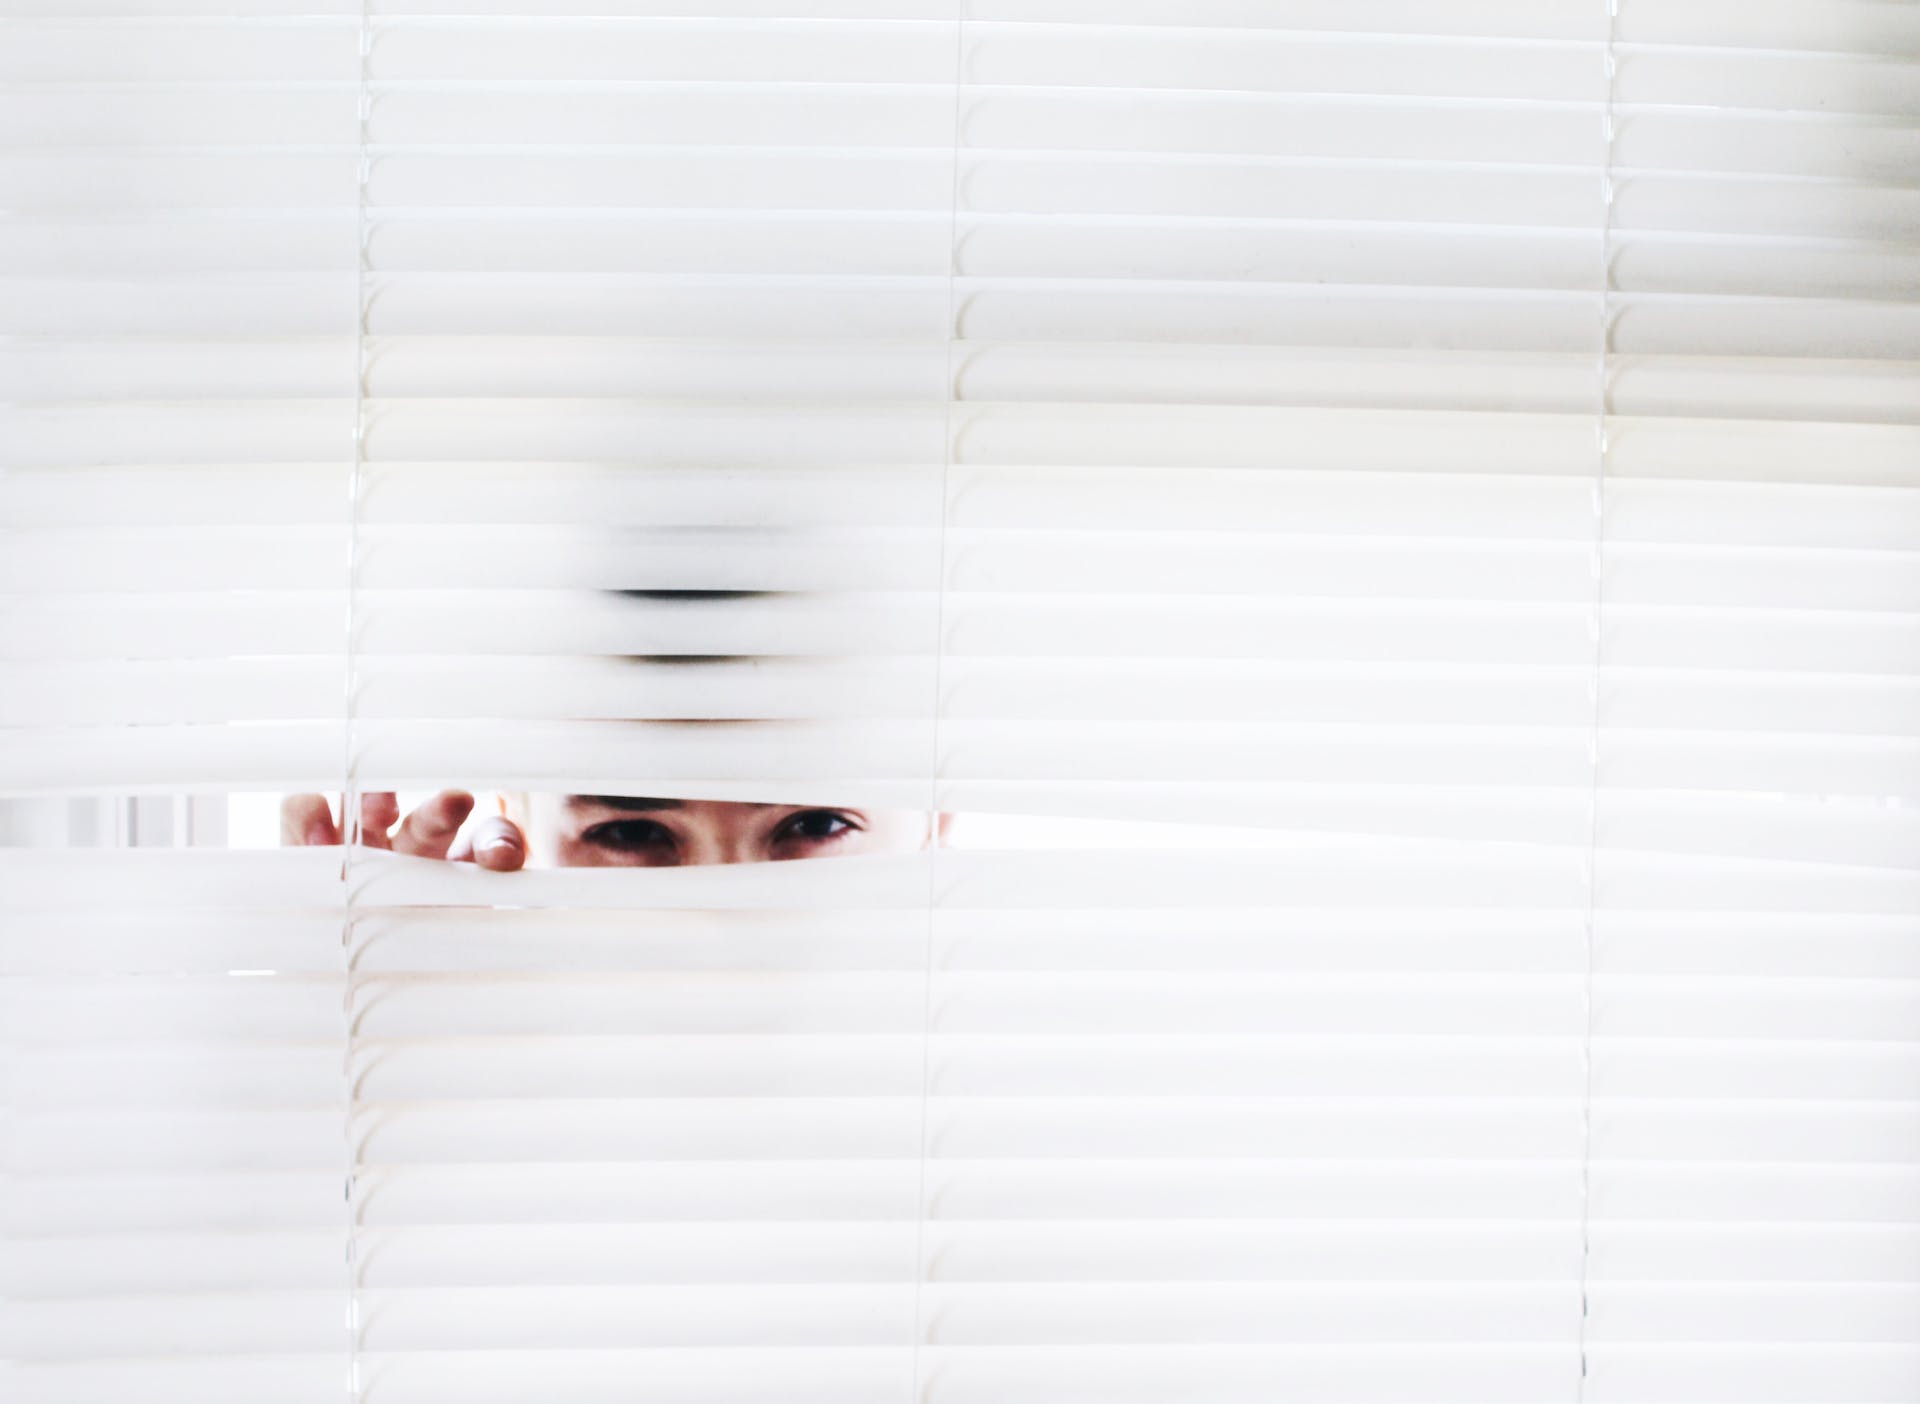 A person peeking through blinds | Source: Pexels